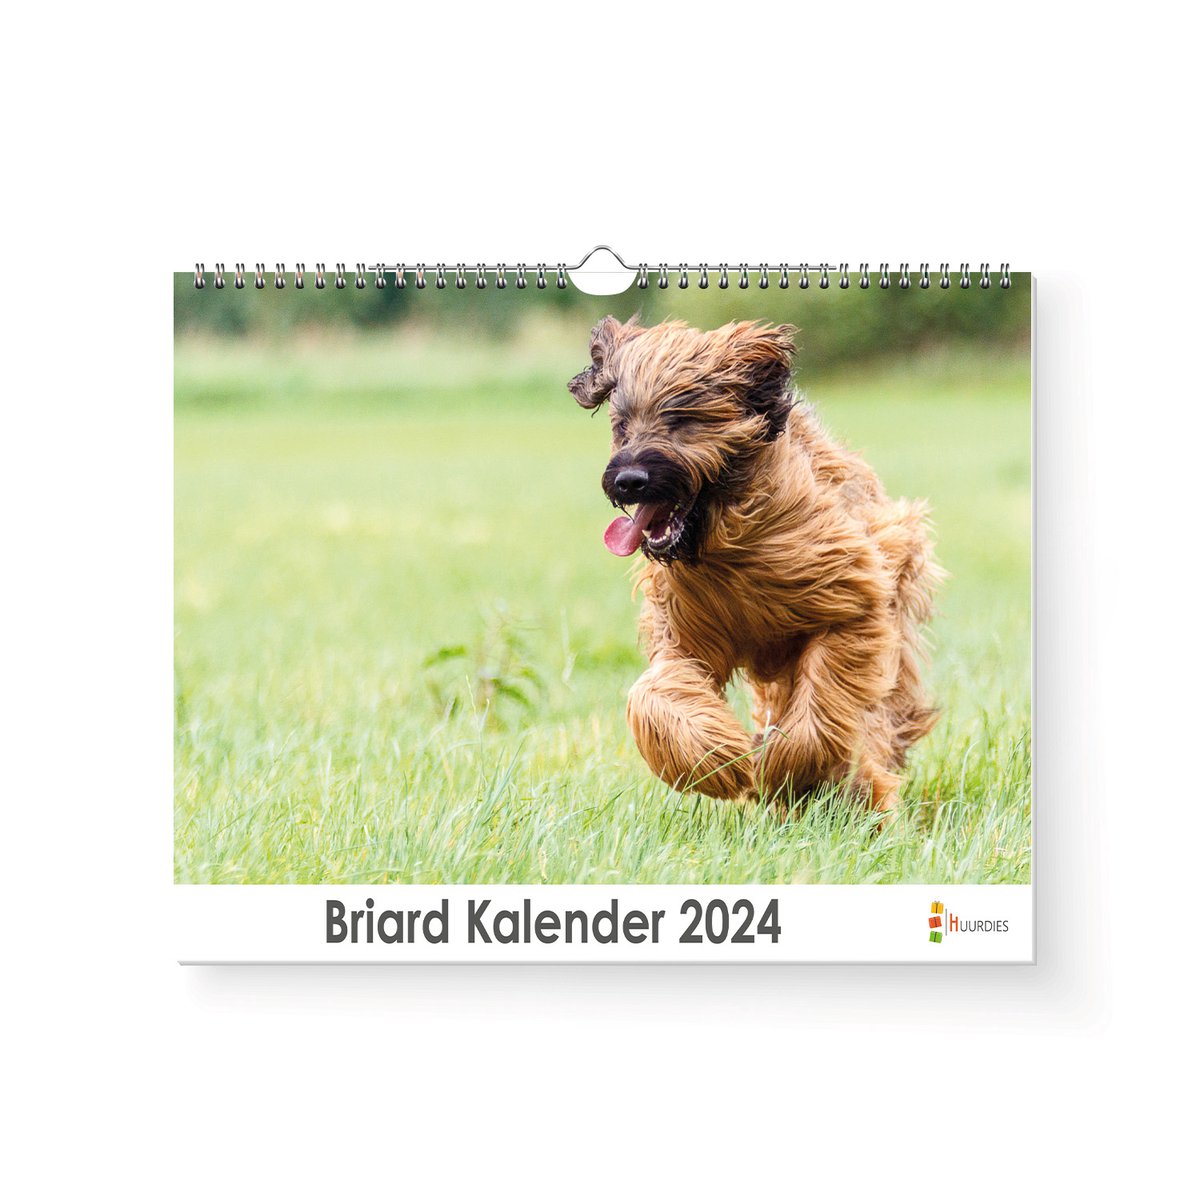 Kalender 2024 - Briard - 35x24cm - 300gms - Spiraalgebonden - Inclusief ophanghaak